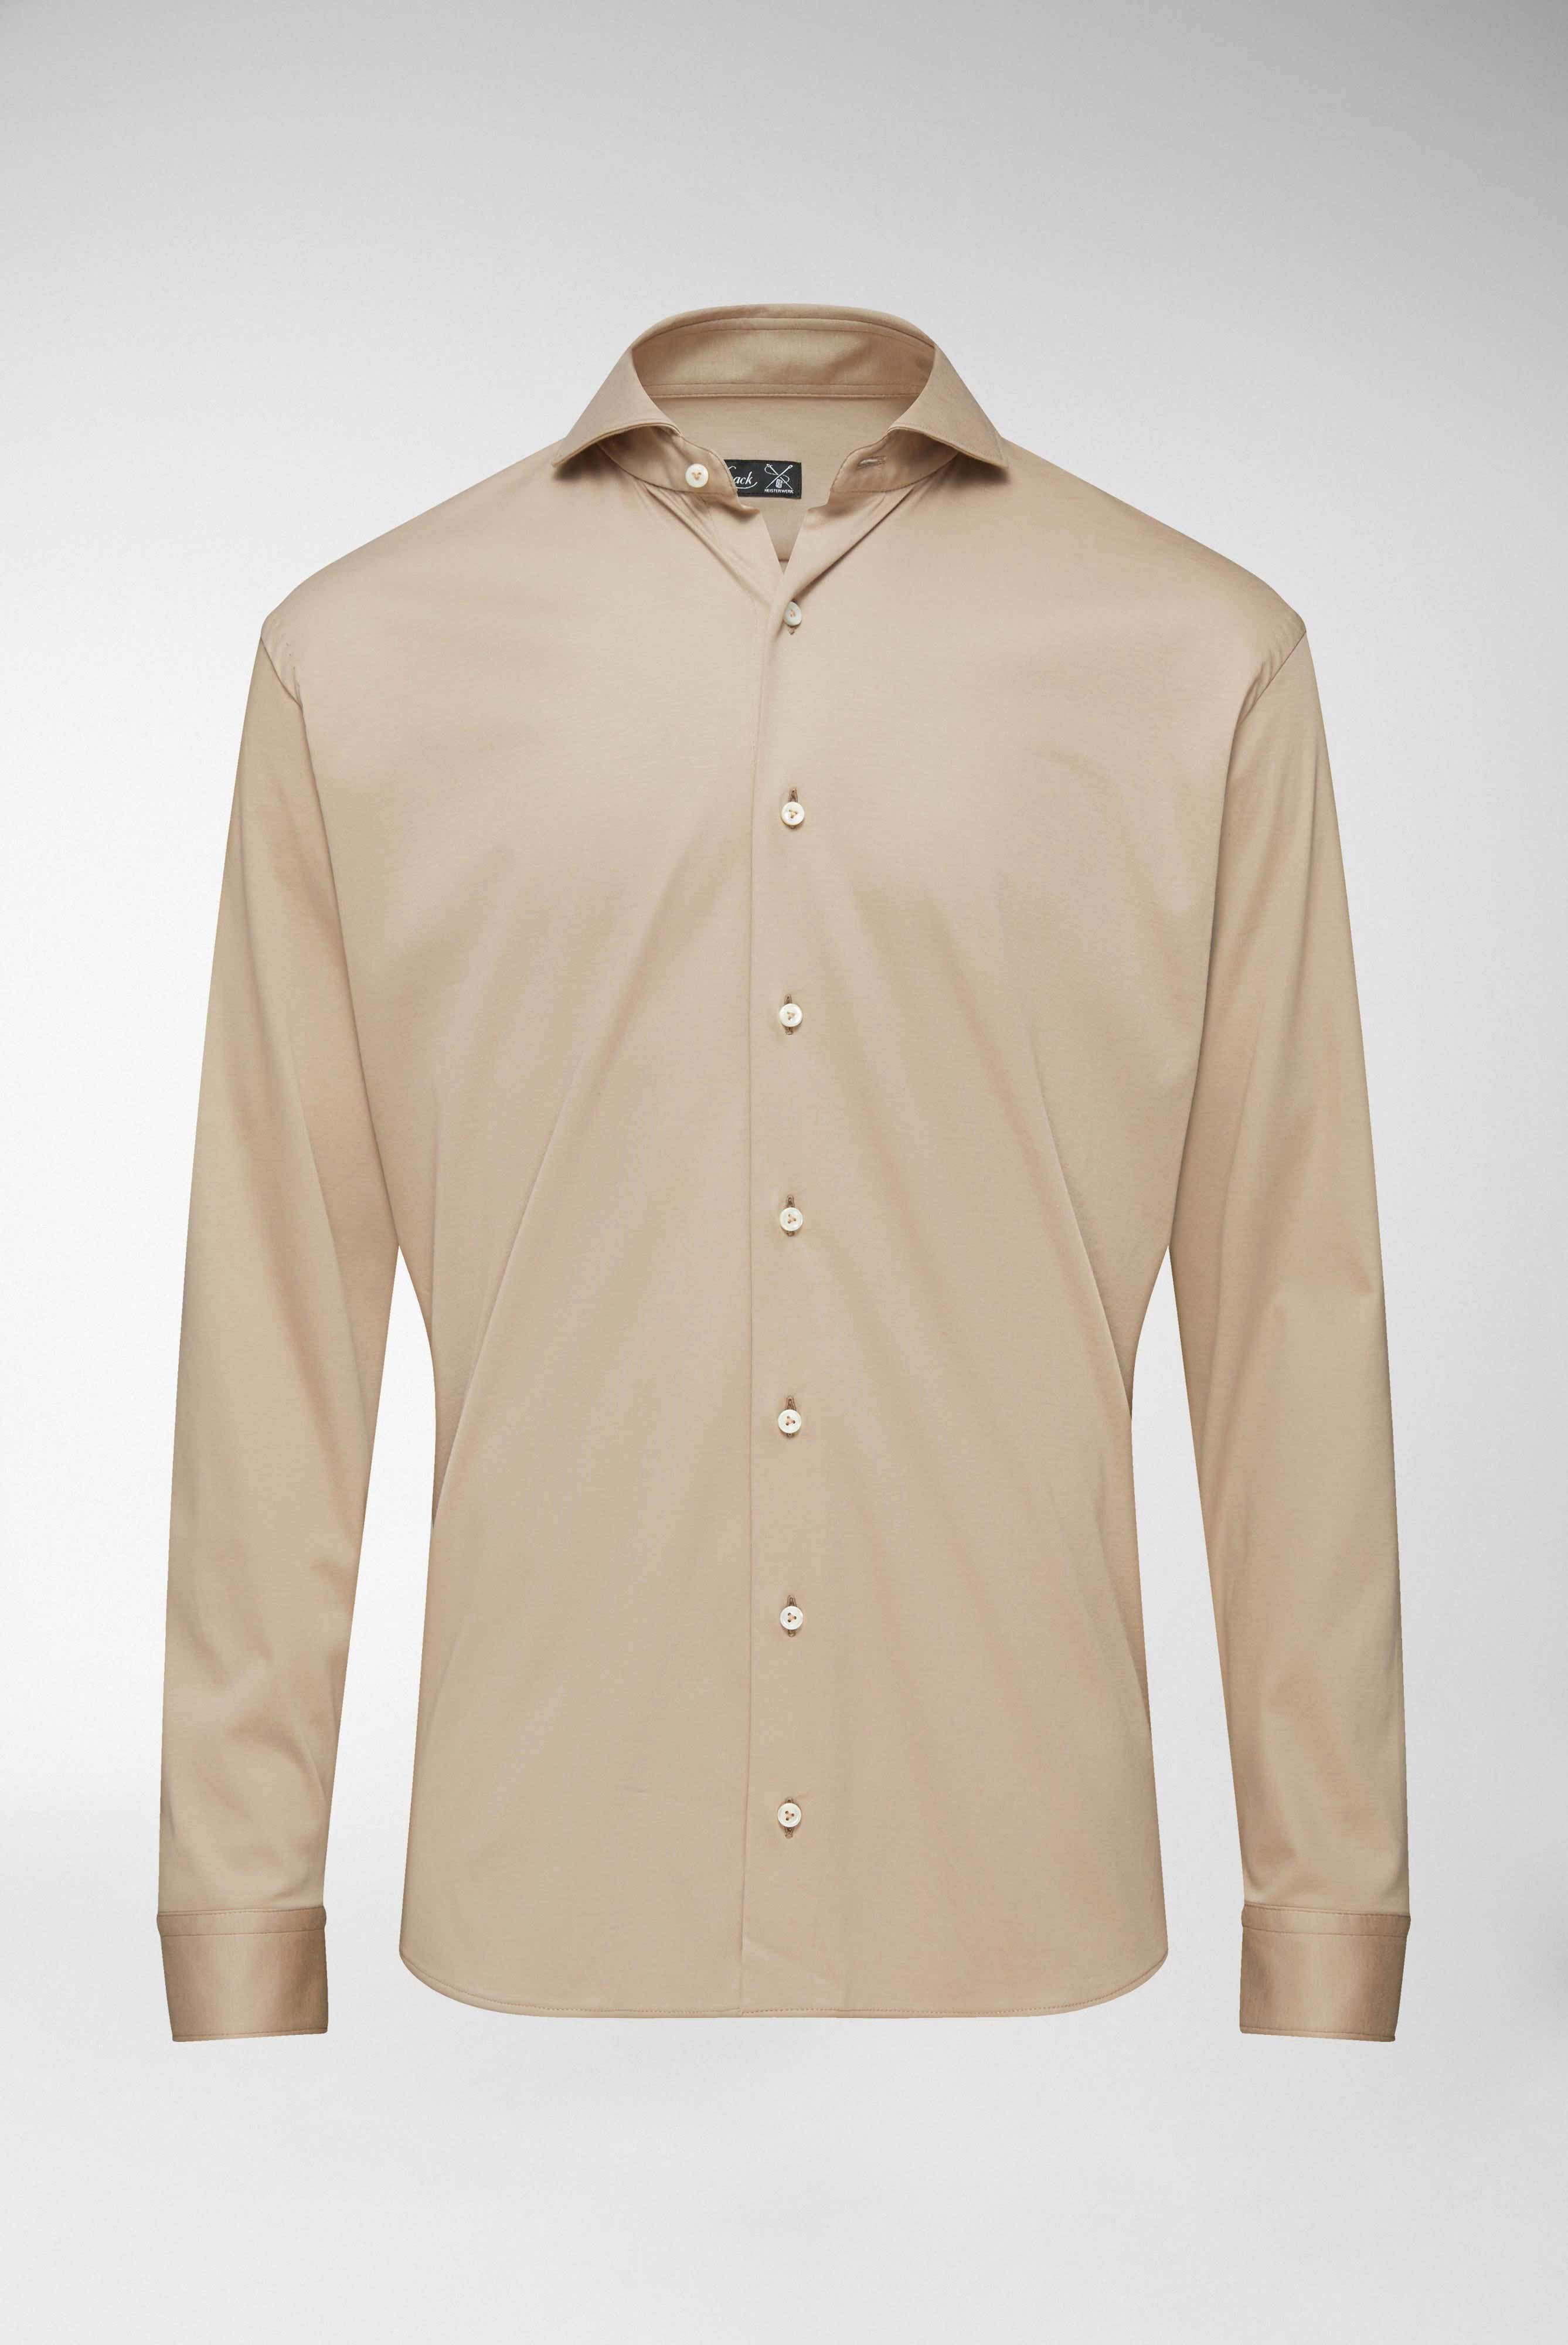 Casual Hemden+Jersey Hemd aus Schweizer Baumwolle Tailor Fit+20.1683.UC.180031.140.L